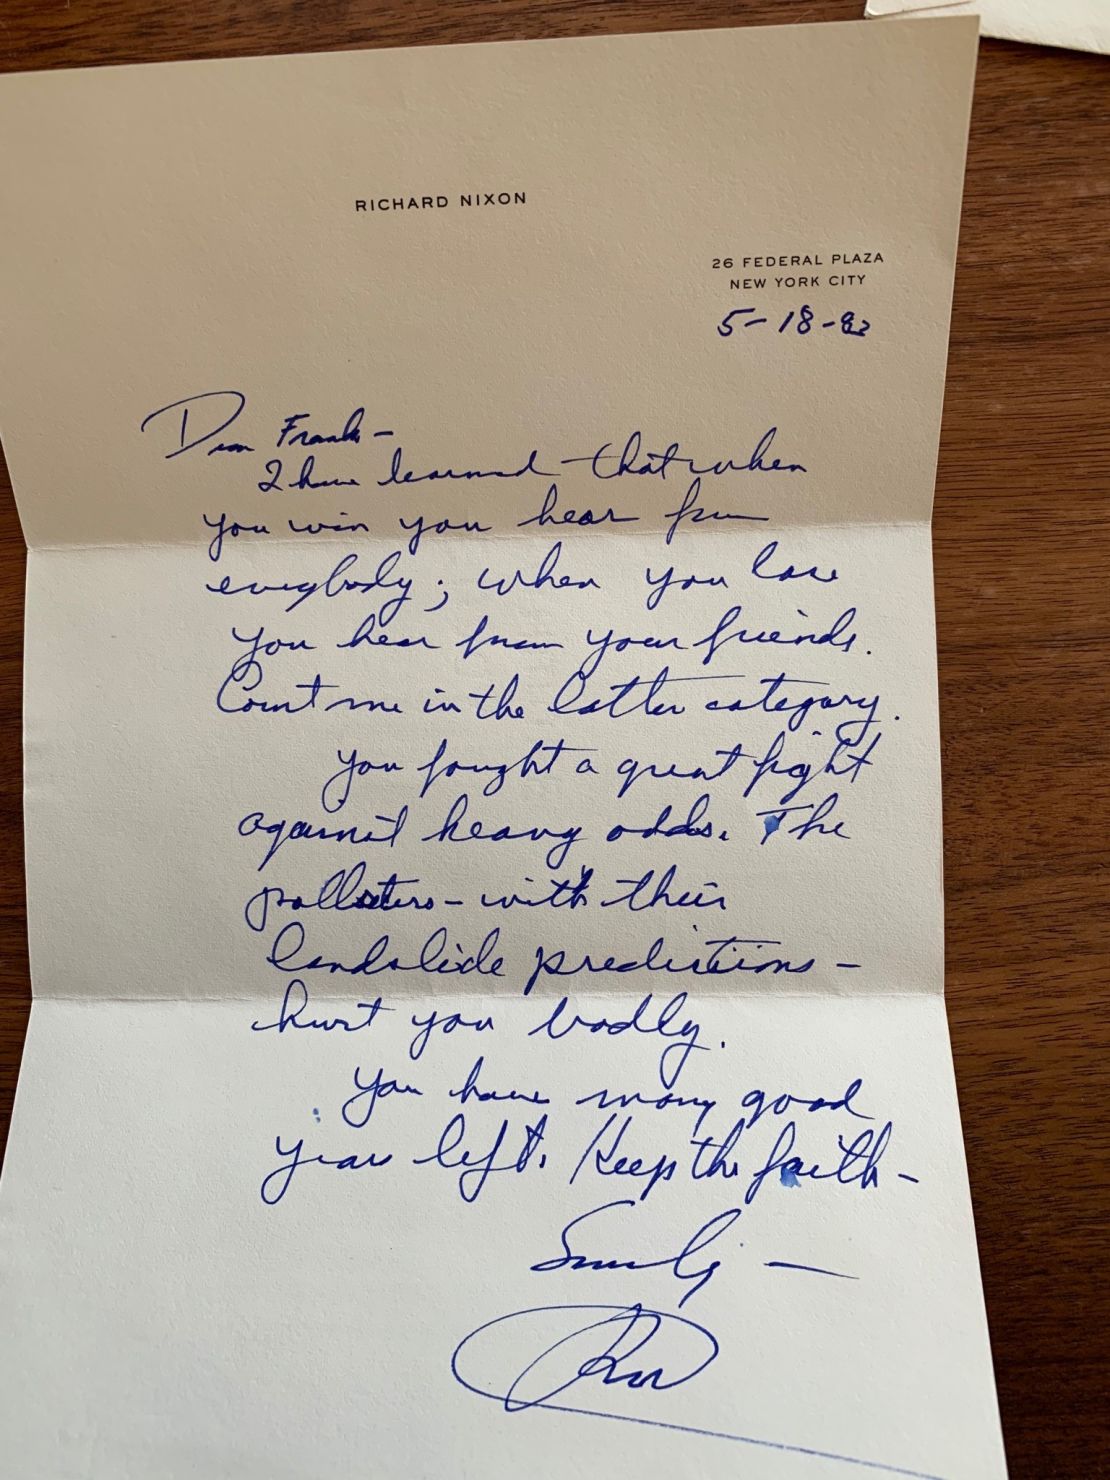 Former President Richard Nixon's letter to Frank Rizzo in 1983.